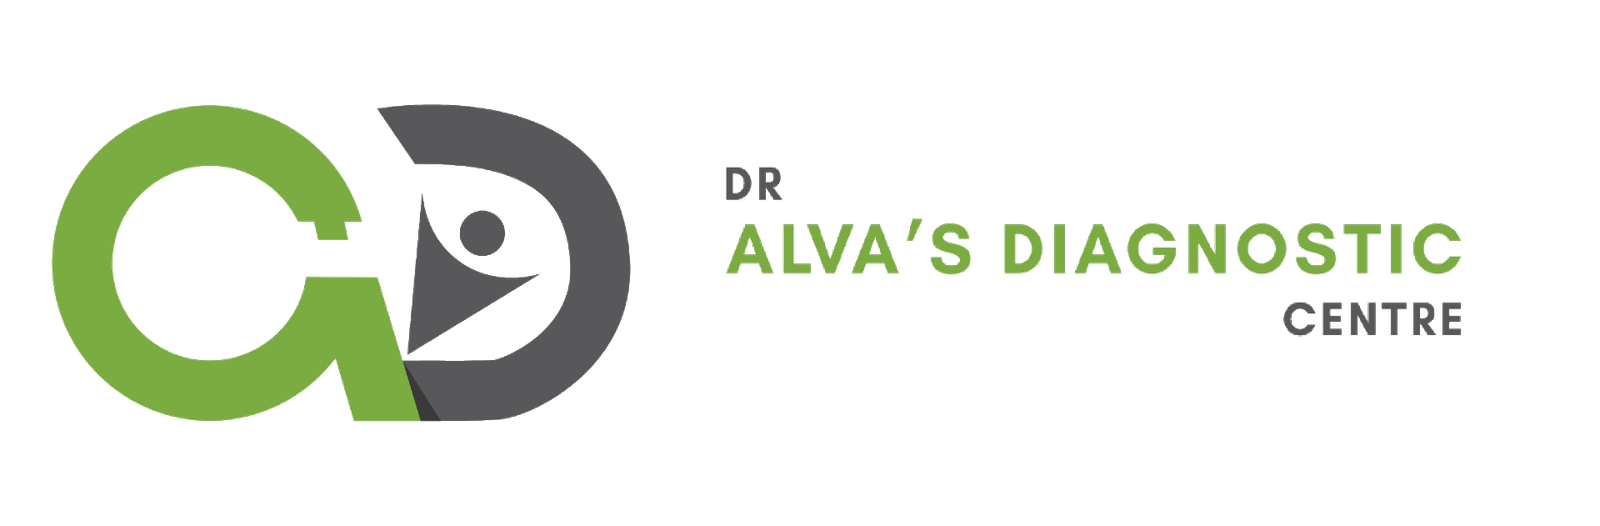 DR.ALVA’S DIAGNOSTIC CENTRE